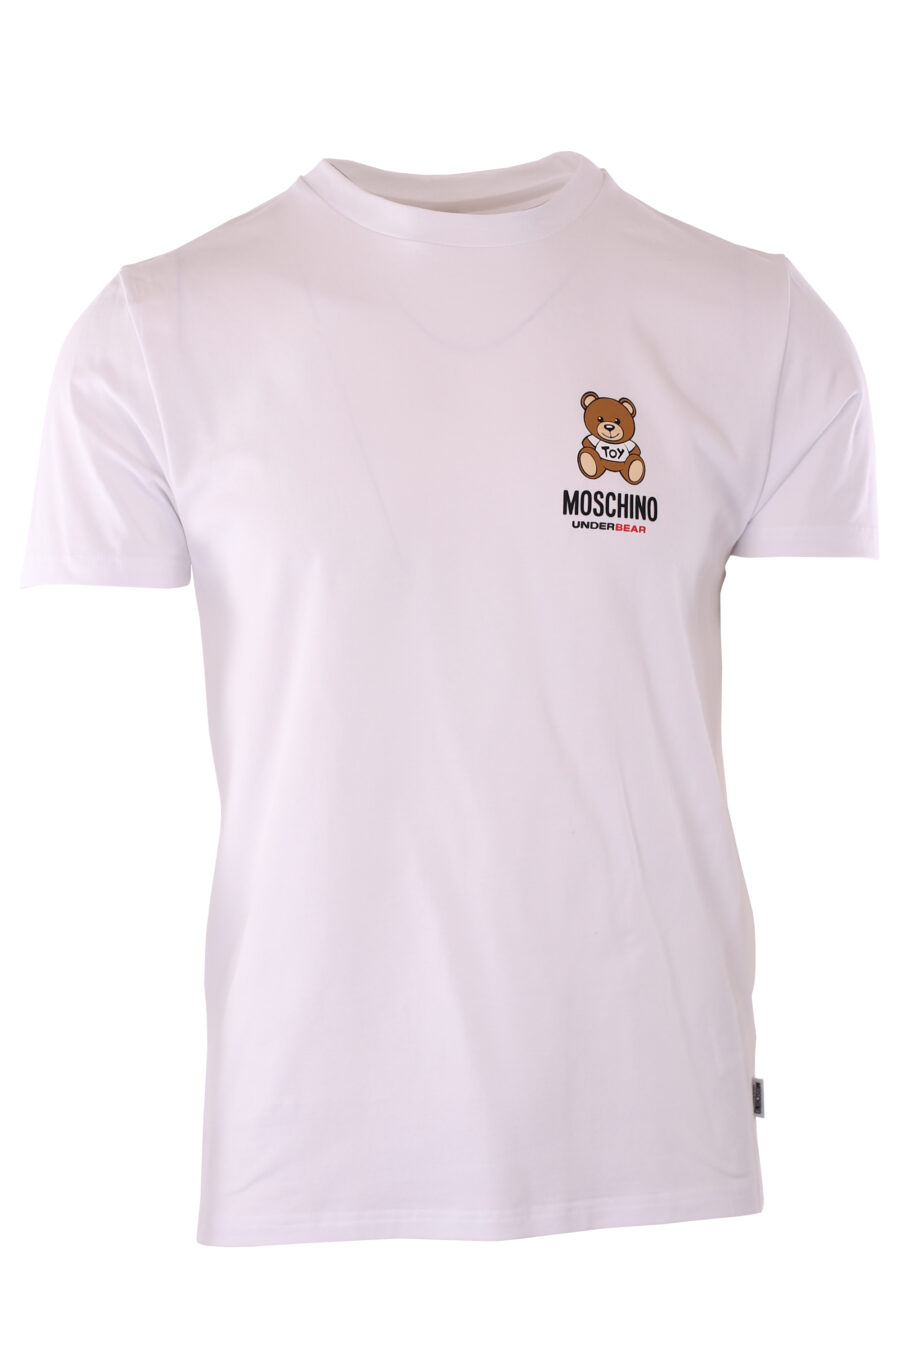 Camiseta blanca "slim fit" con minilogo oso "underbear" - IMG 6609